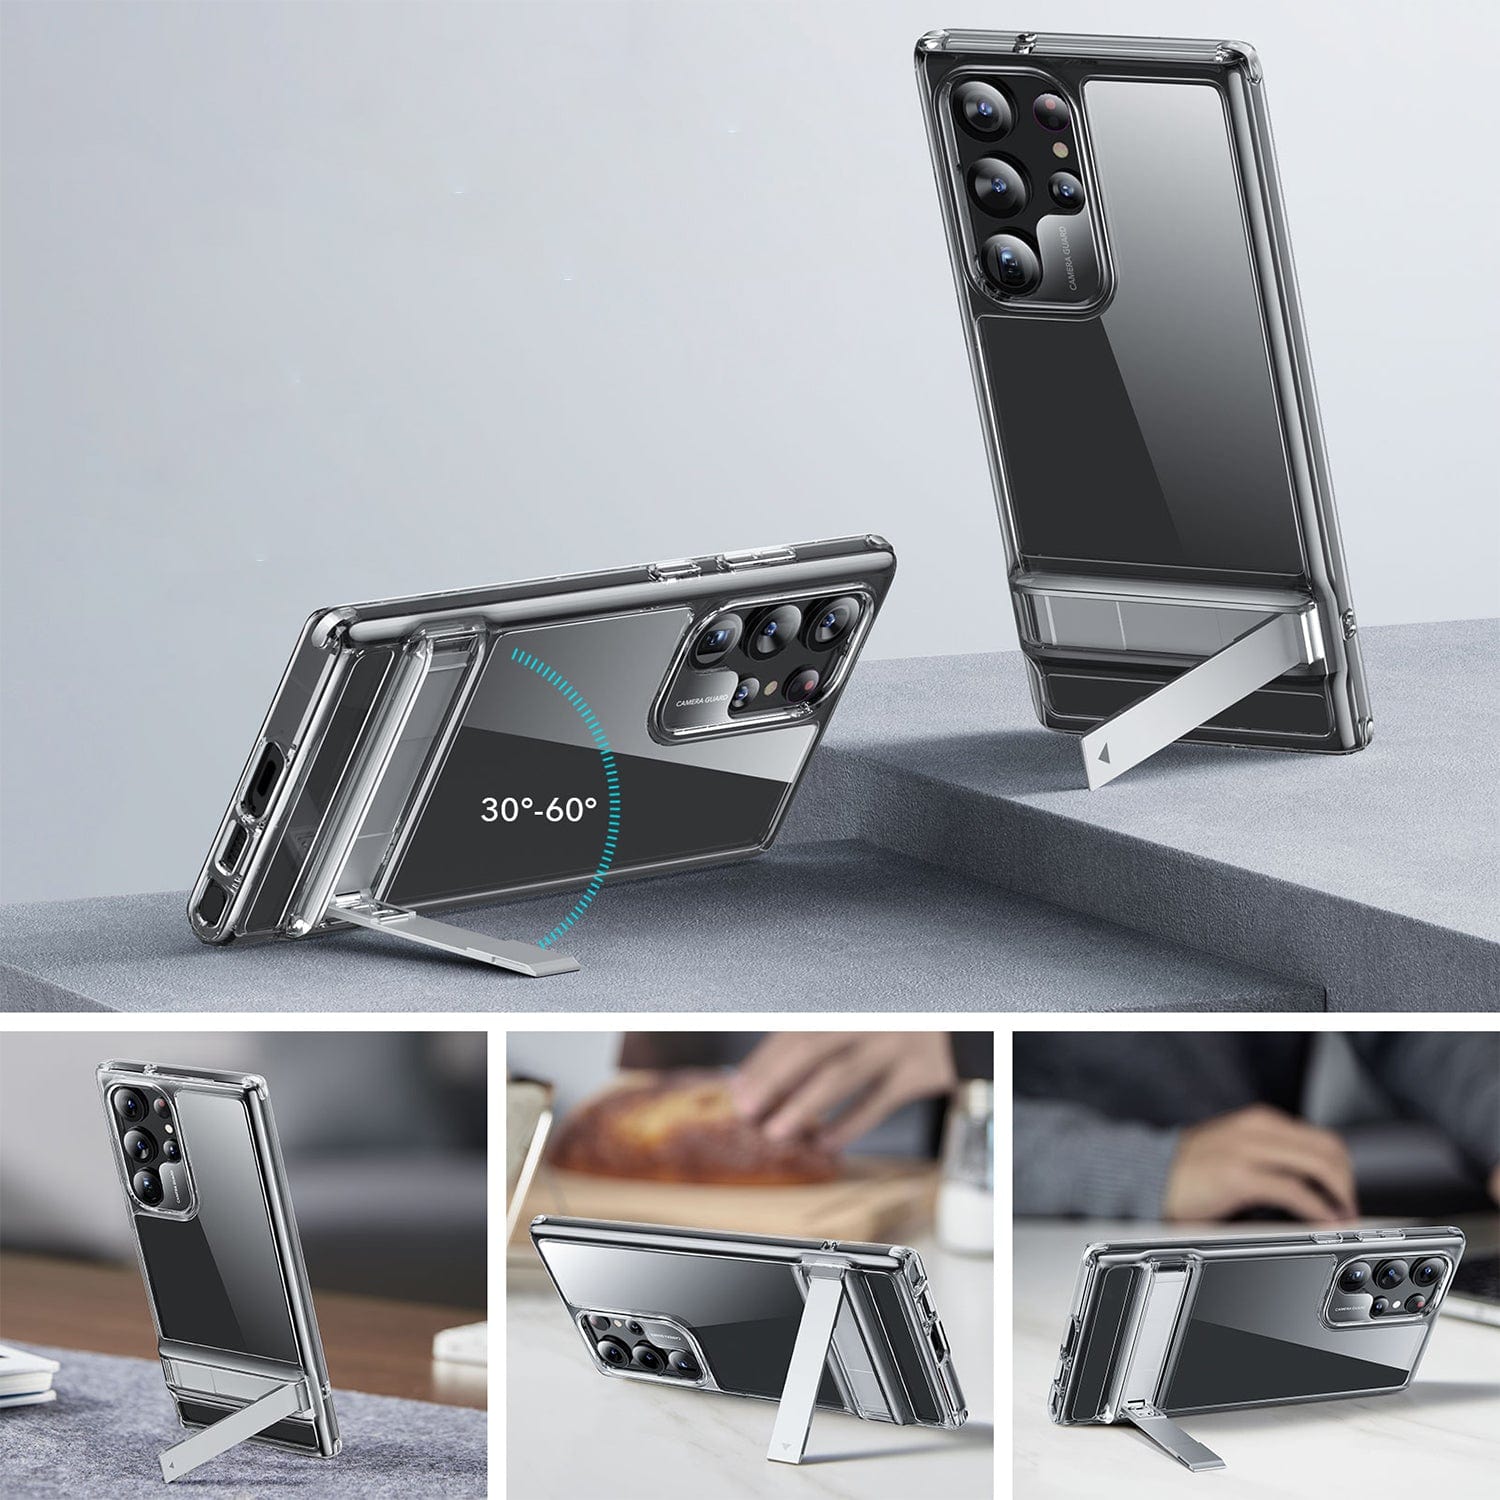 Samsung Galaxy S23 Ultra Boost Kickstand Case